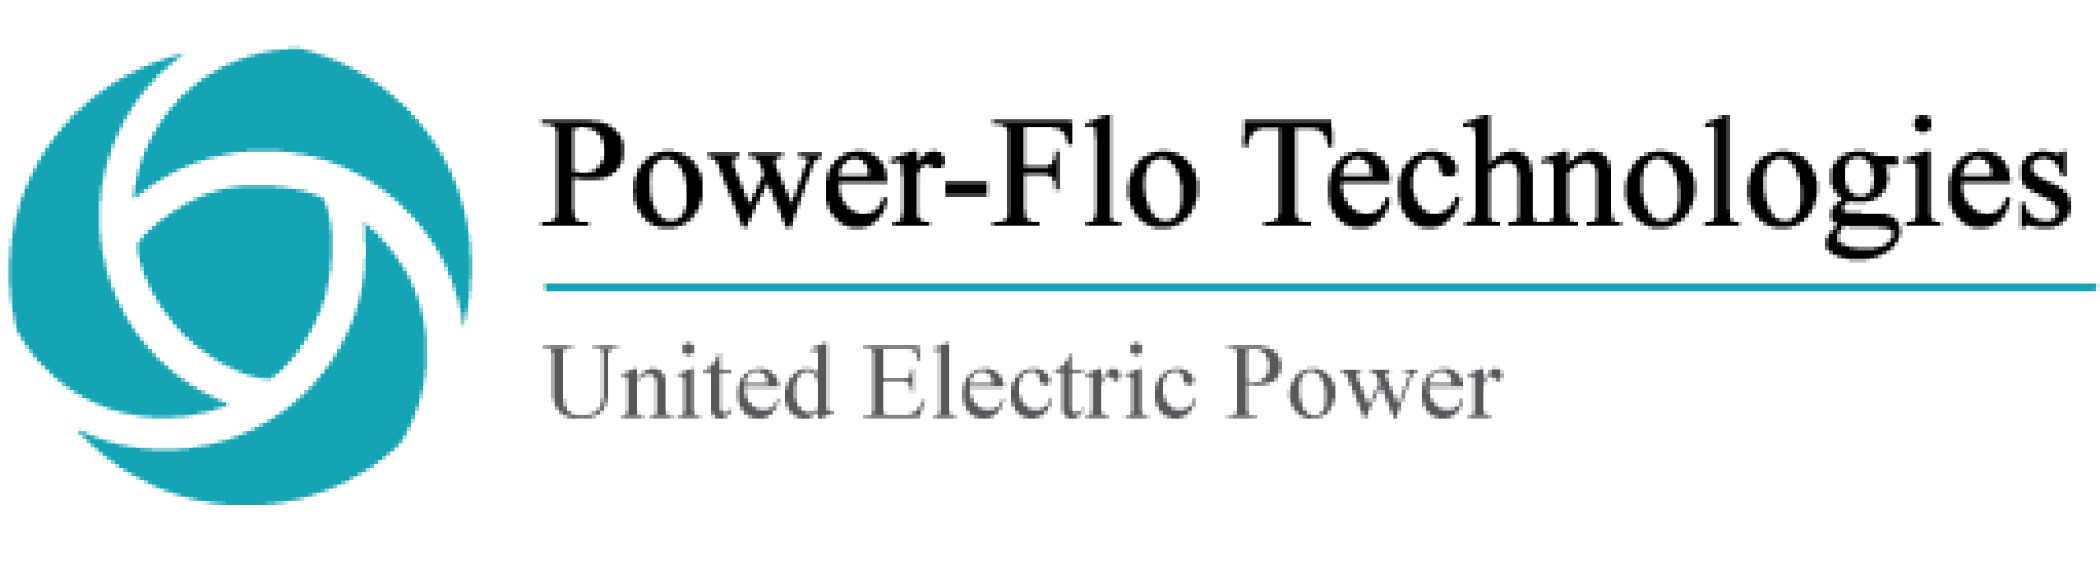 Power-Flo Technologies